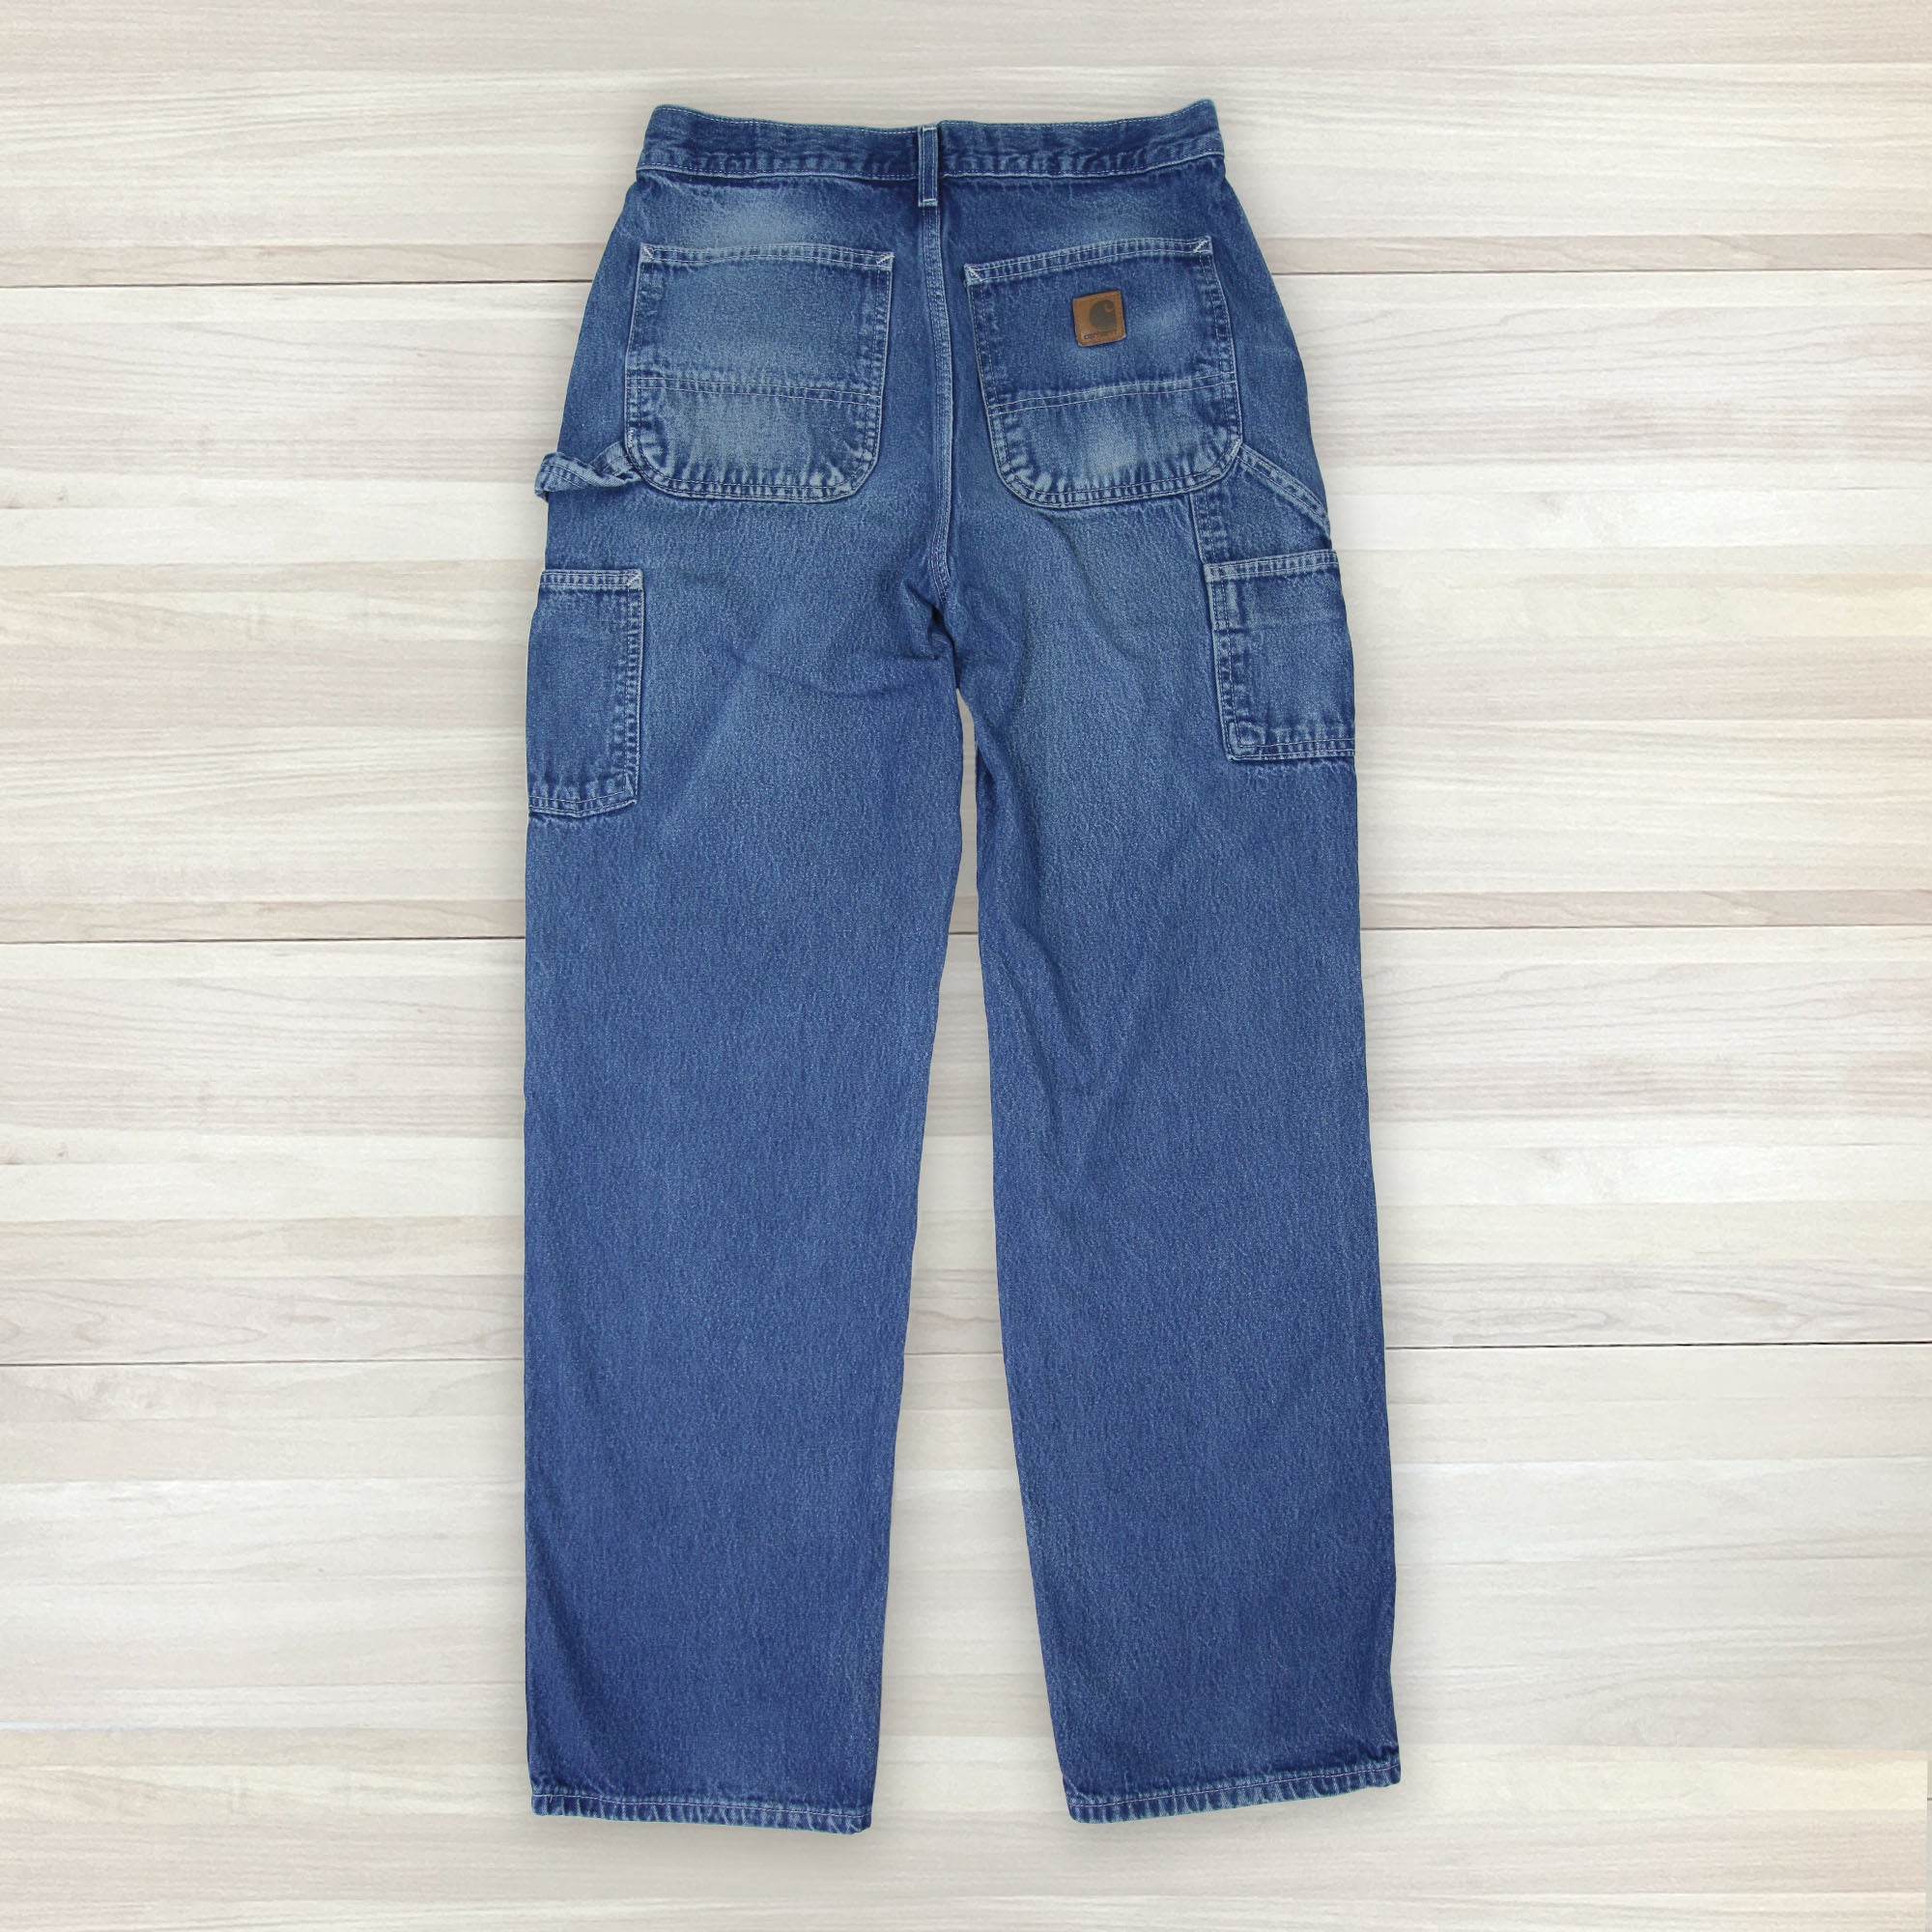 Men's Carhartt B13 DST Carpenter Jeans - Measures 30x33-3